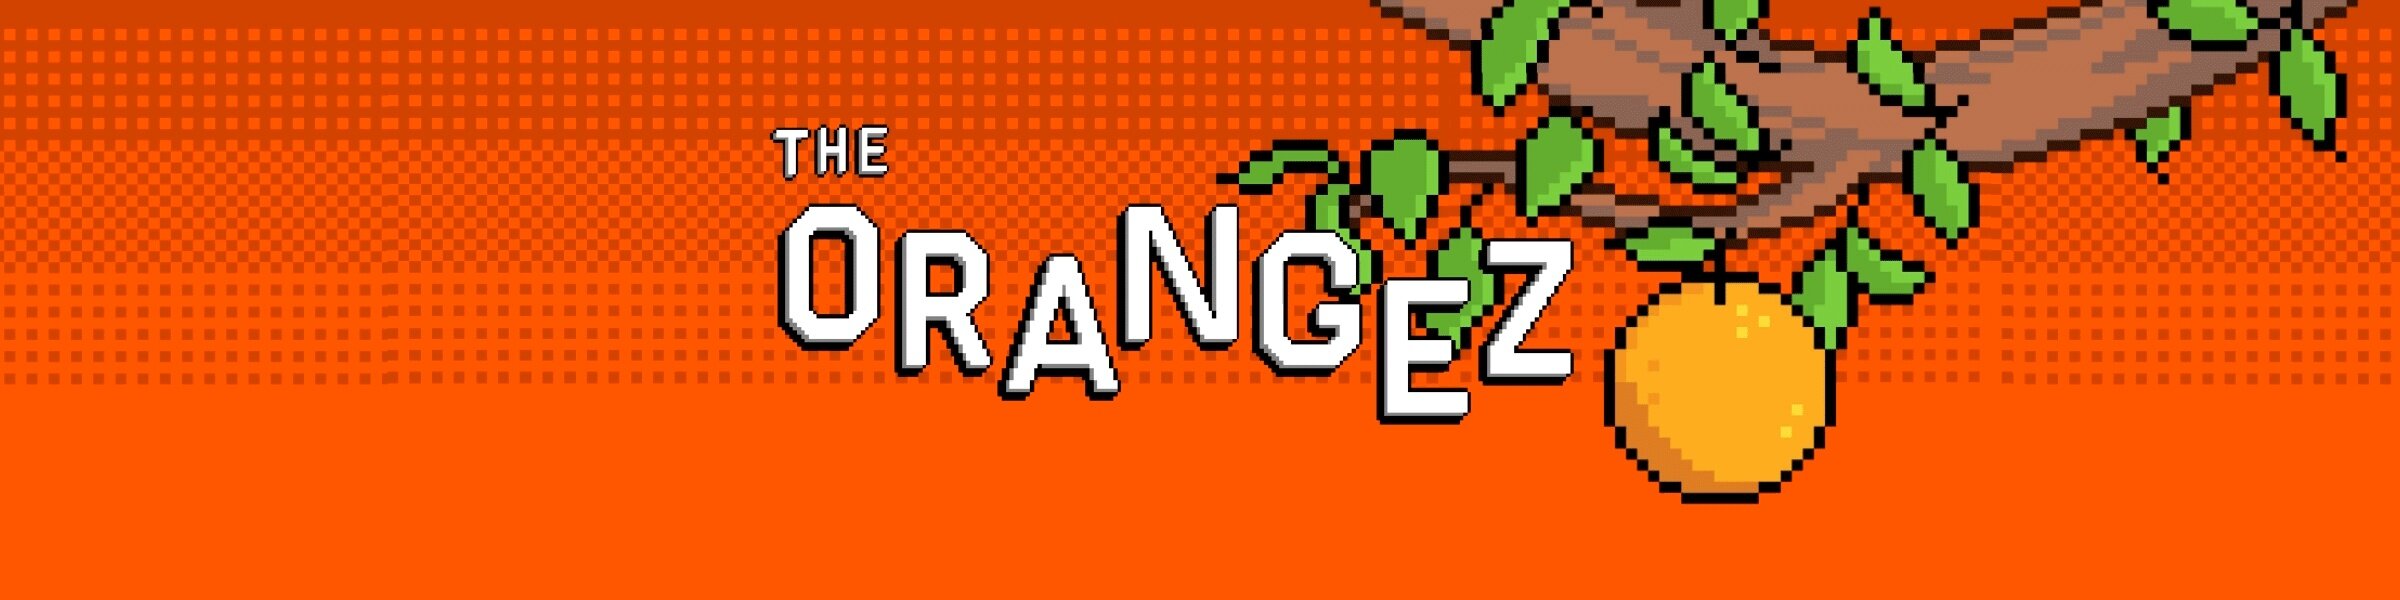 The Orangez background